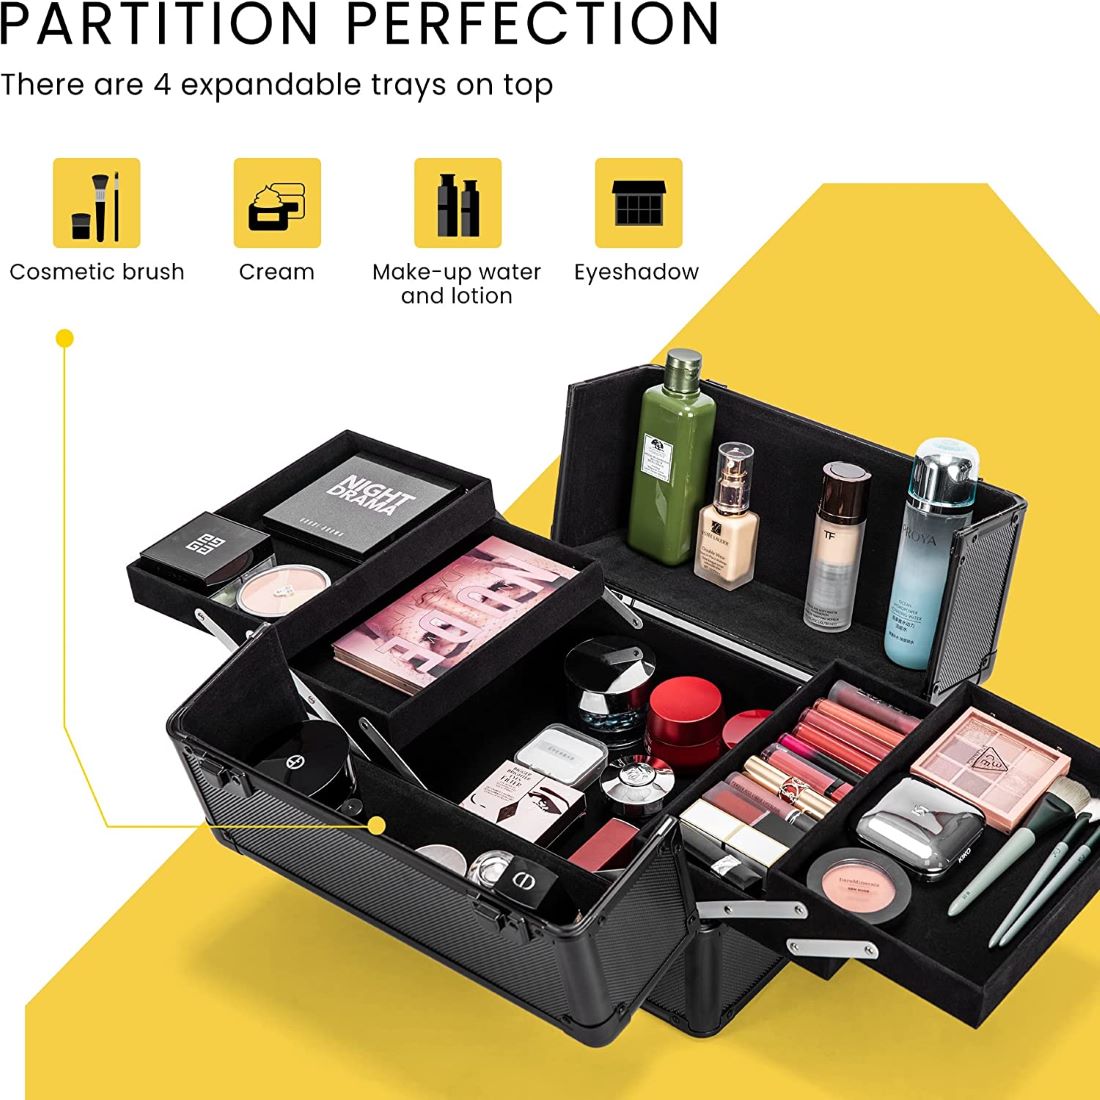 The Art Box: Makeup Organiser/ Vanity/ Jewel Box /Lehenga Trunk